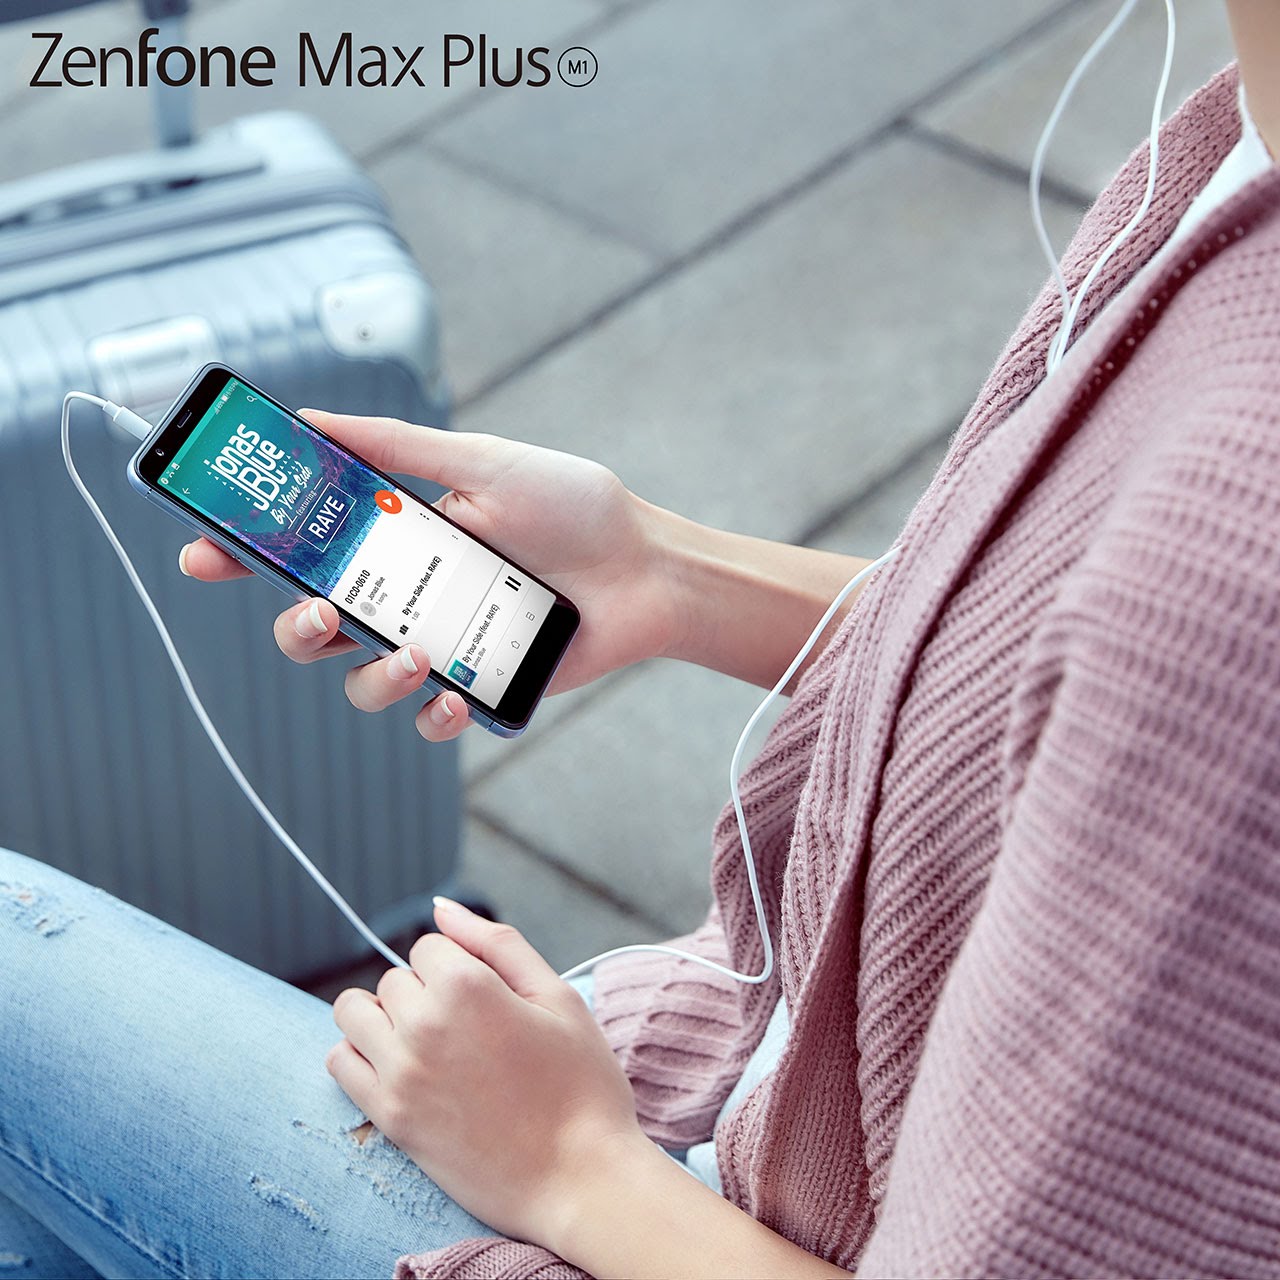 ASUS ra mắt ZenFone Max Plus (M1): màn hình Fullview, pin 4130 mAh, camera kép, 5.49 triệu